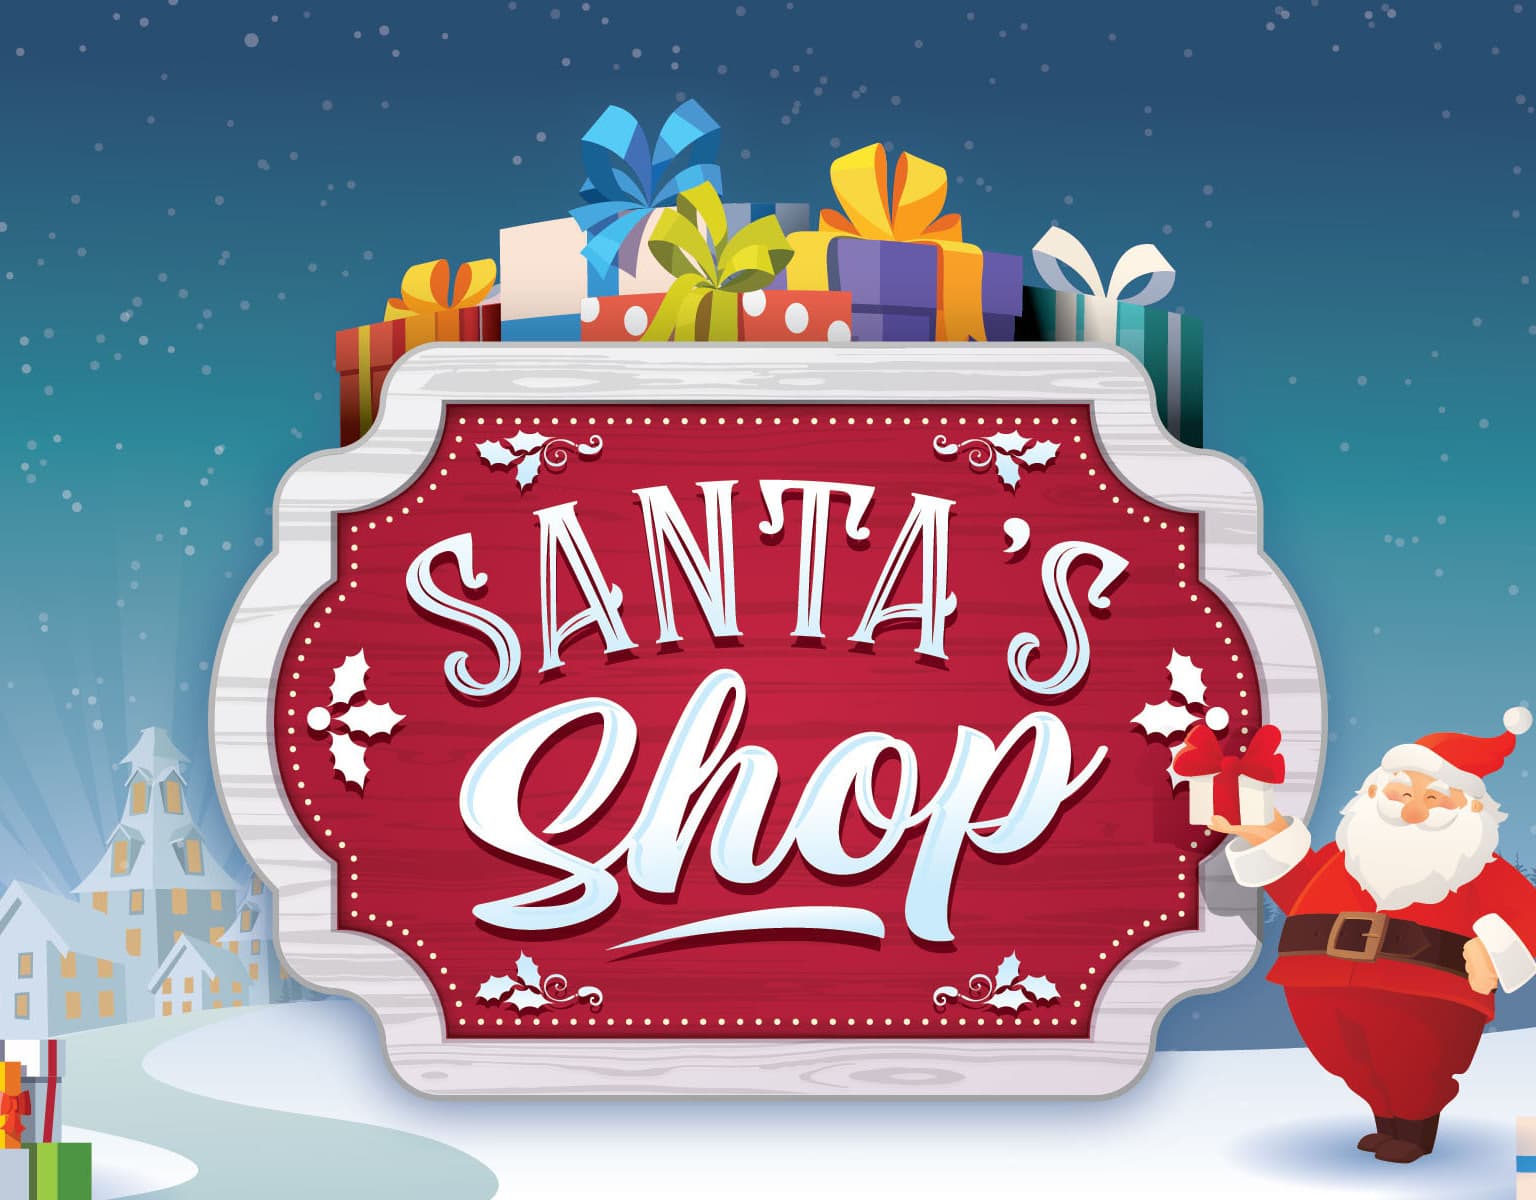 Santa's Shop